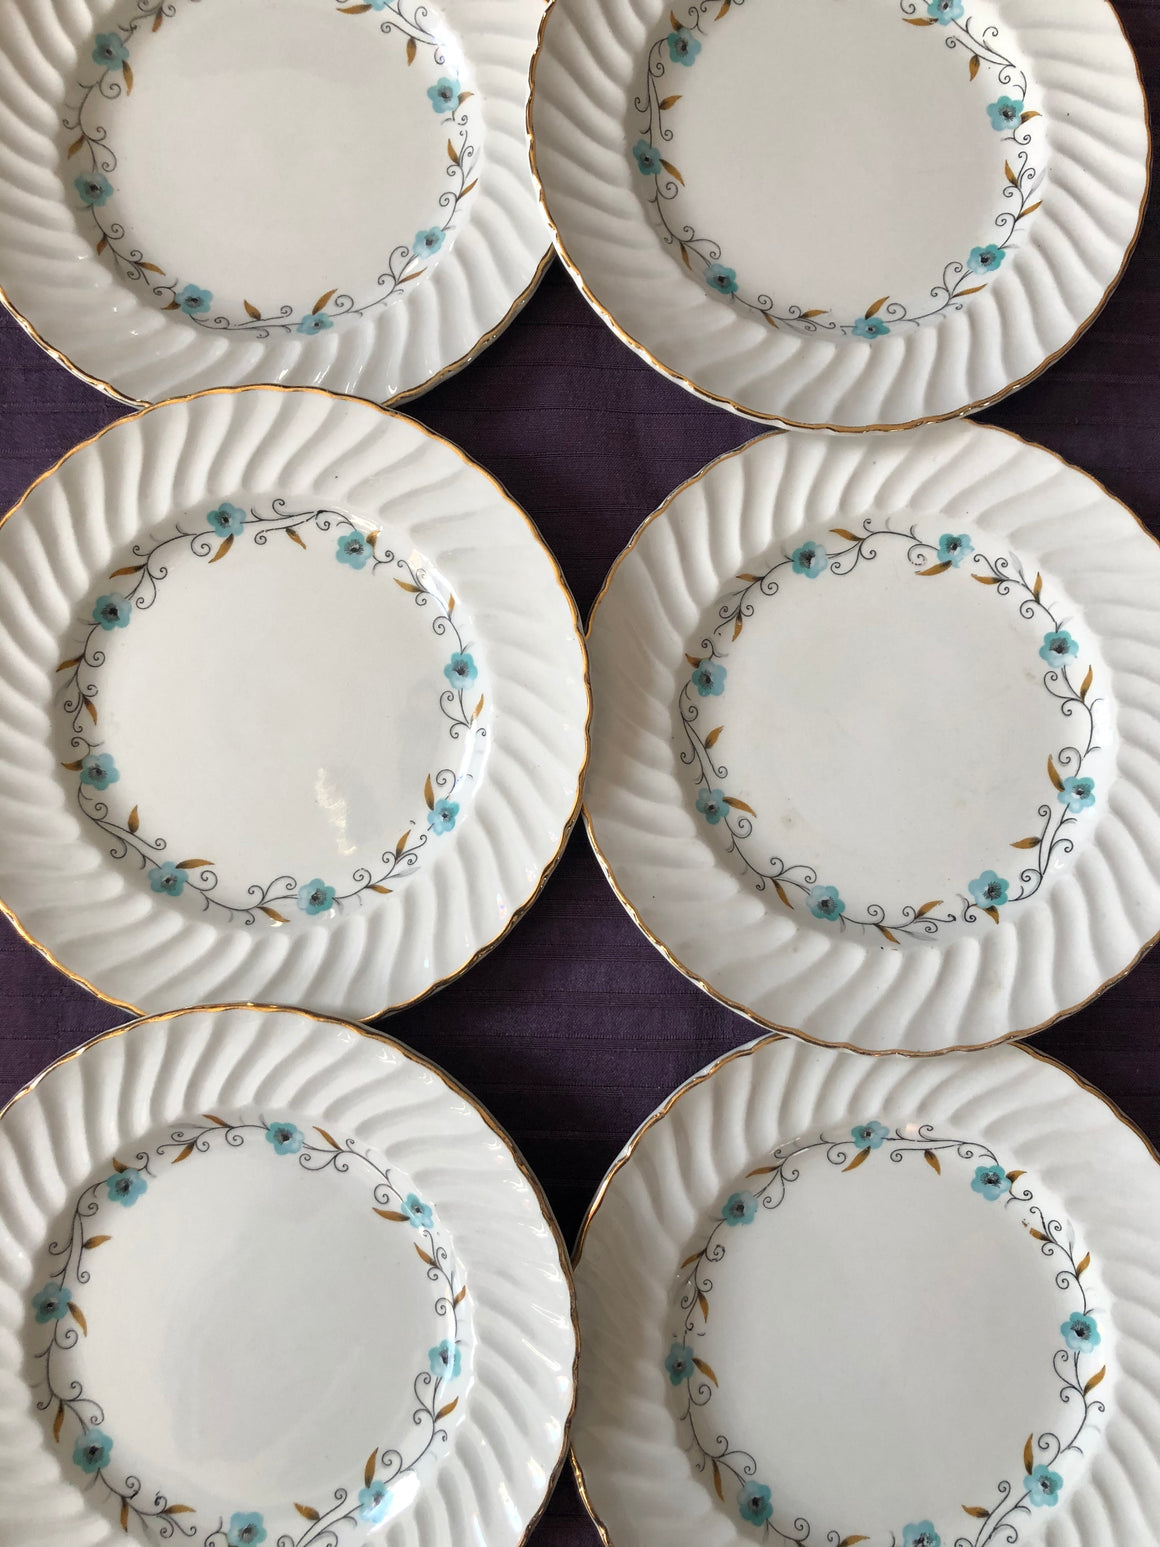 Set of 6 Vintage Plates - Royal Wessex Plates